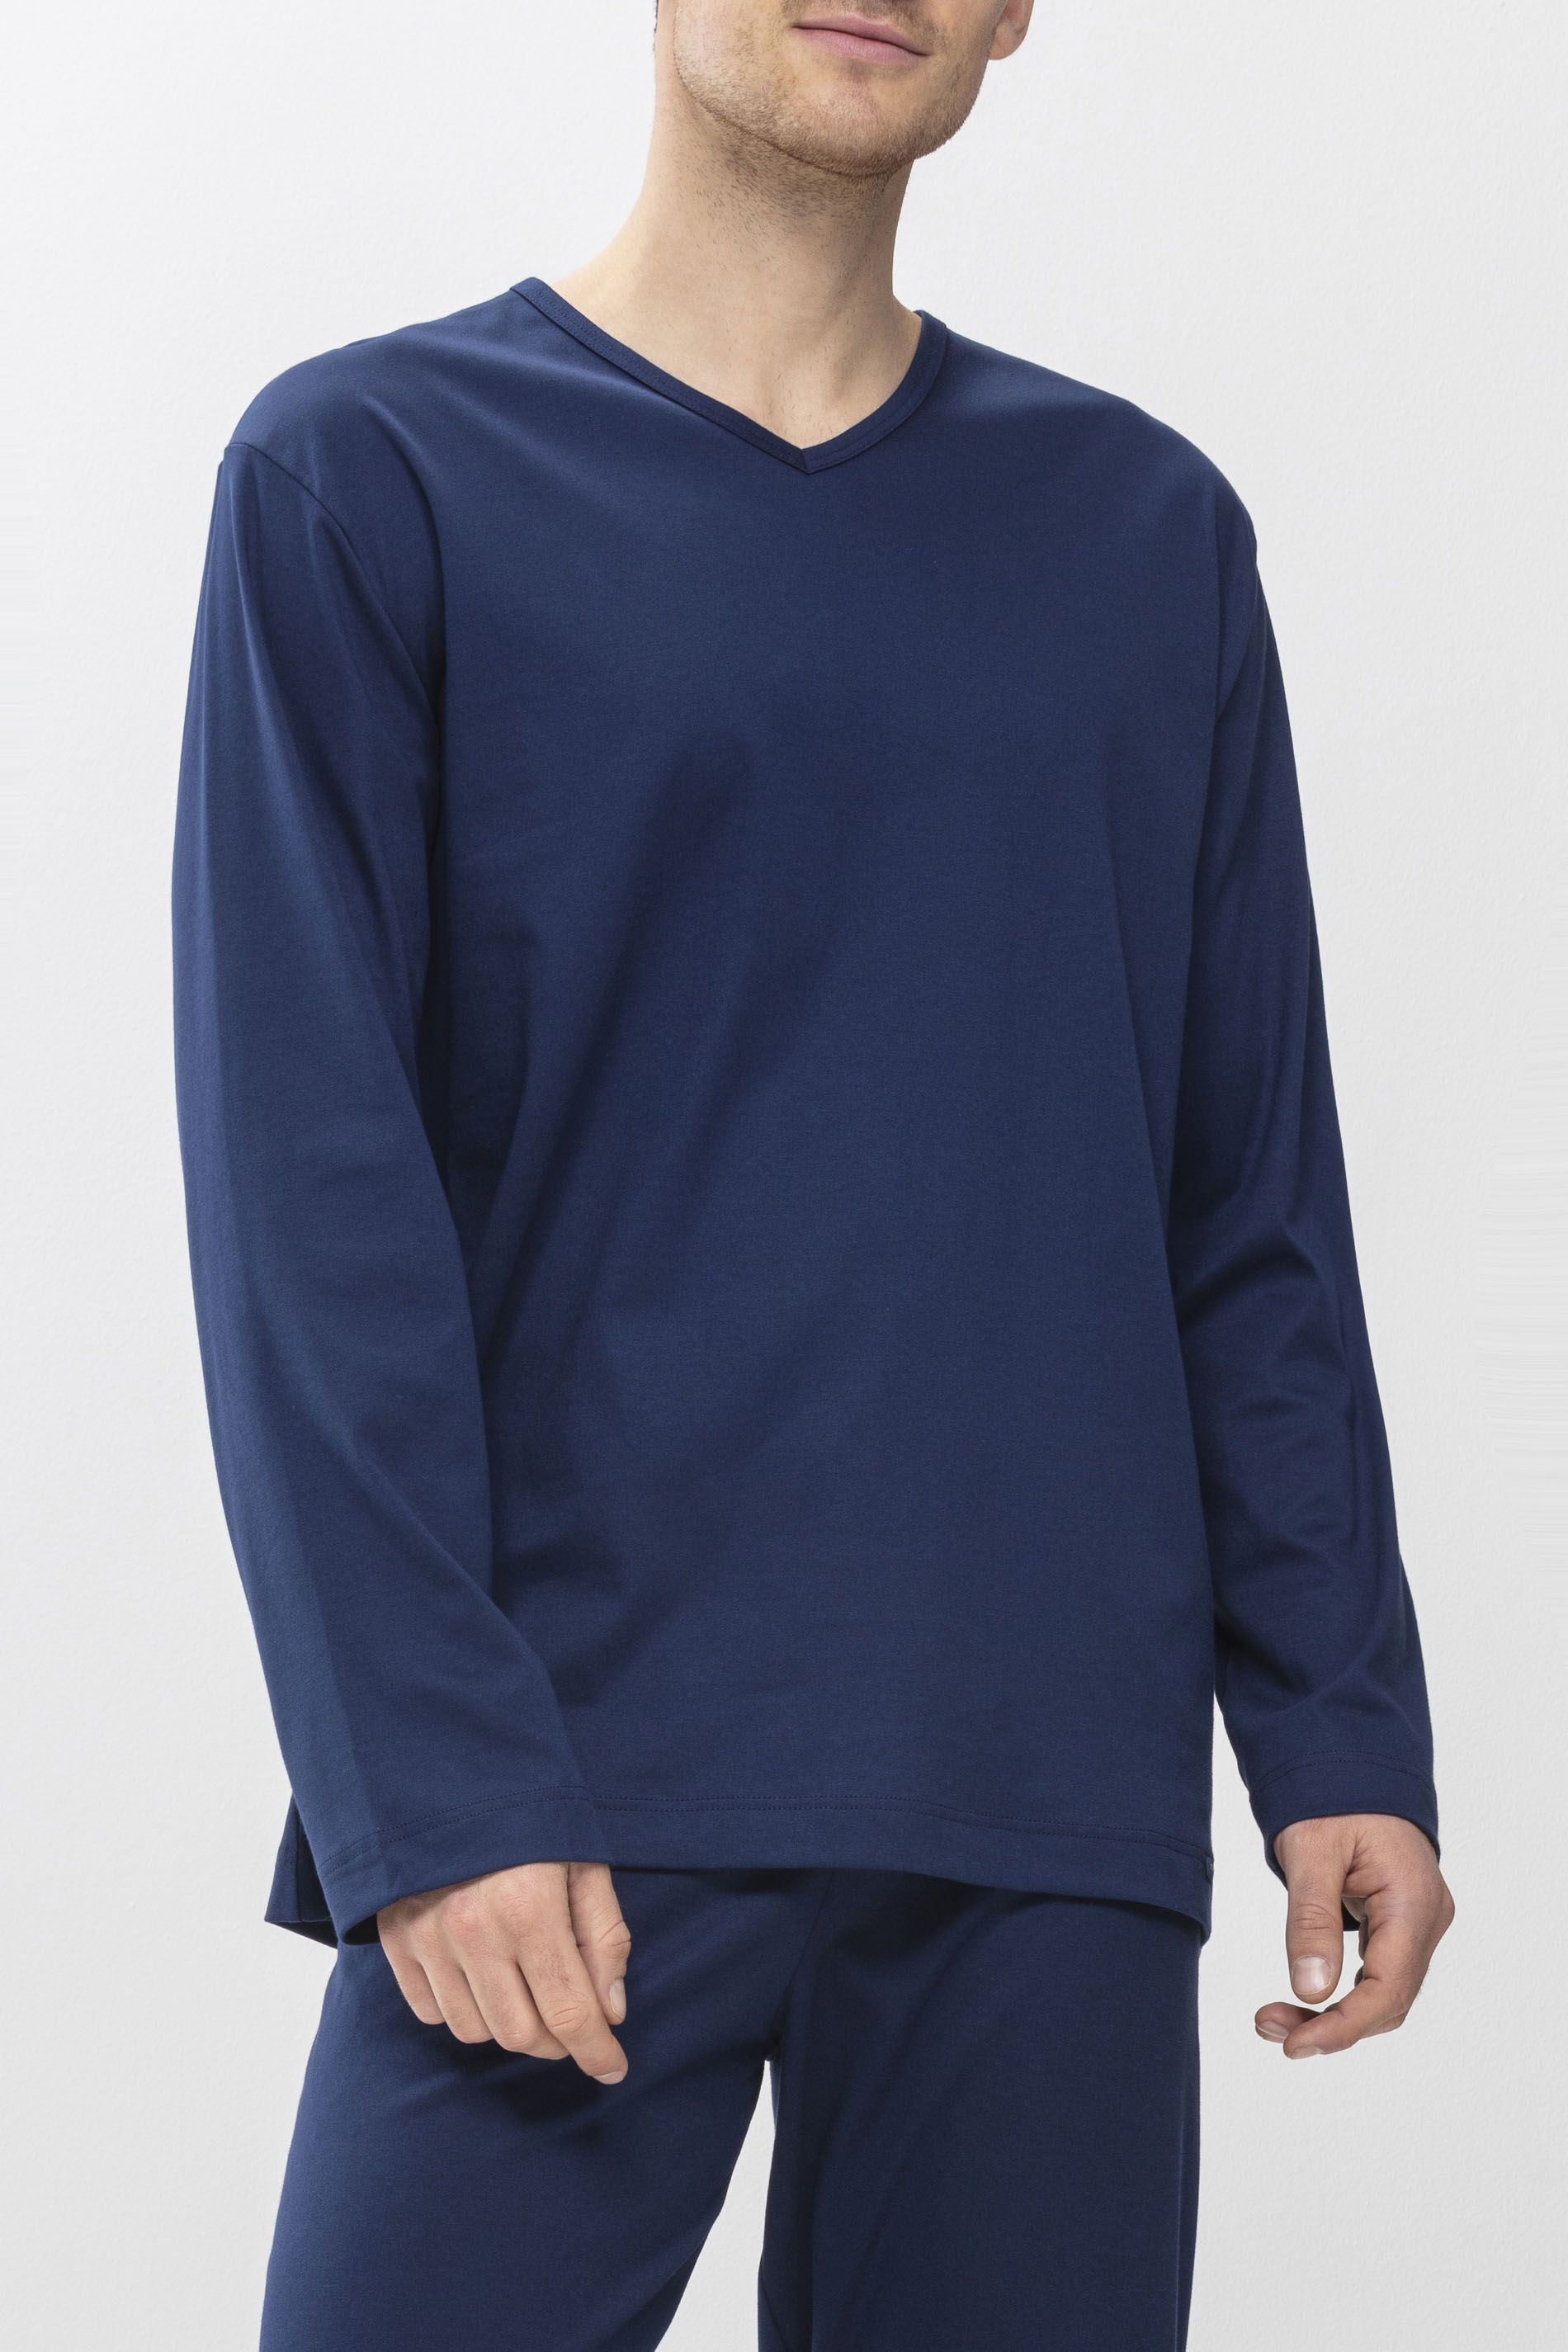 Long-sleeve shirt Neptune Serie Melton Front View | mey®